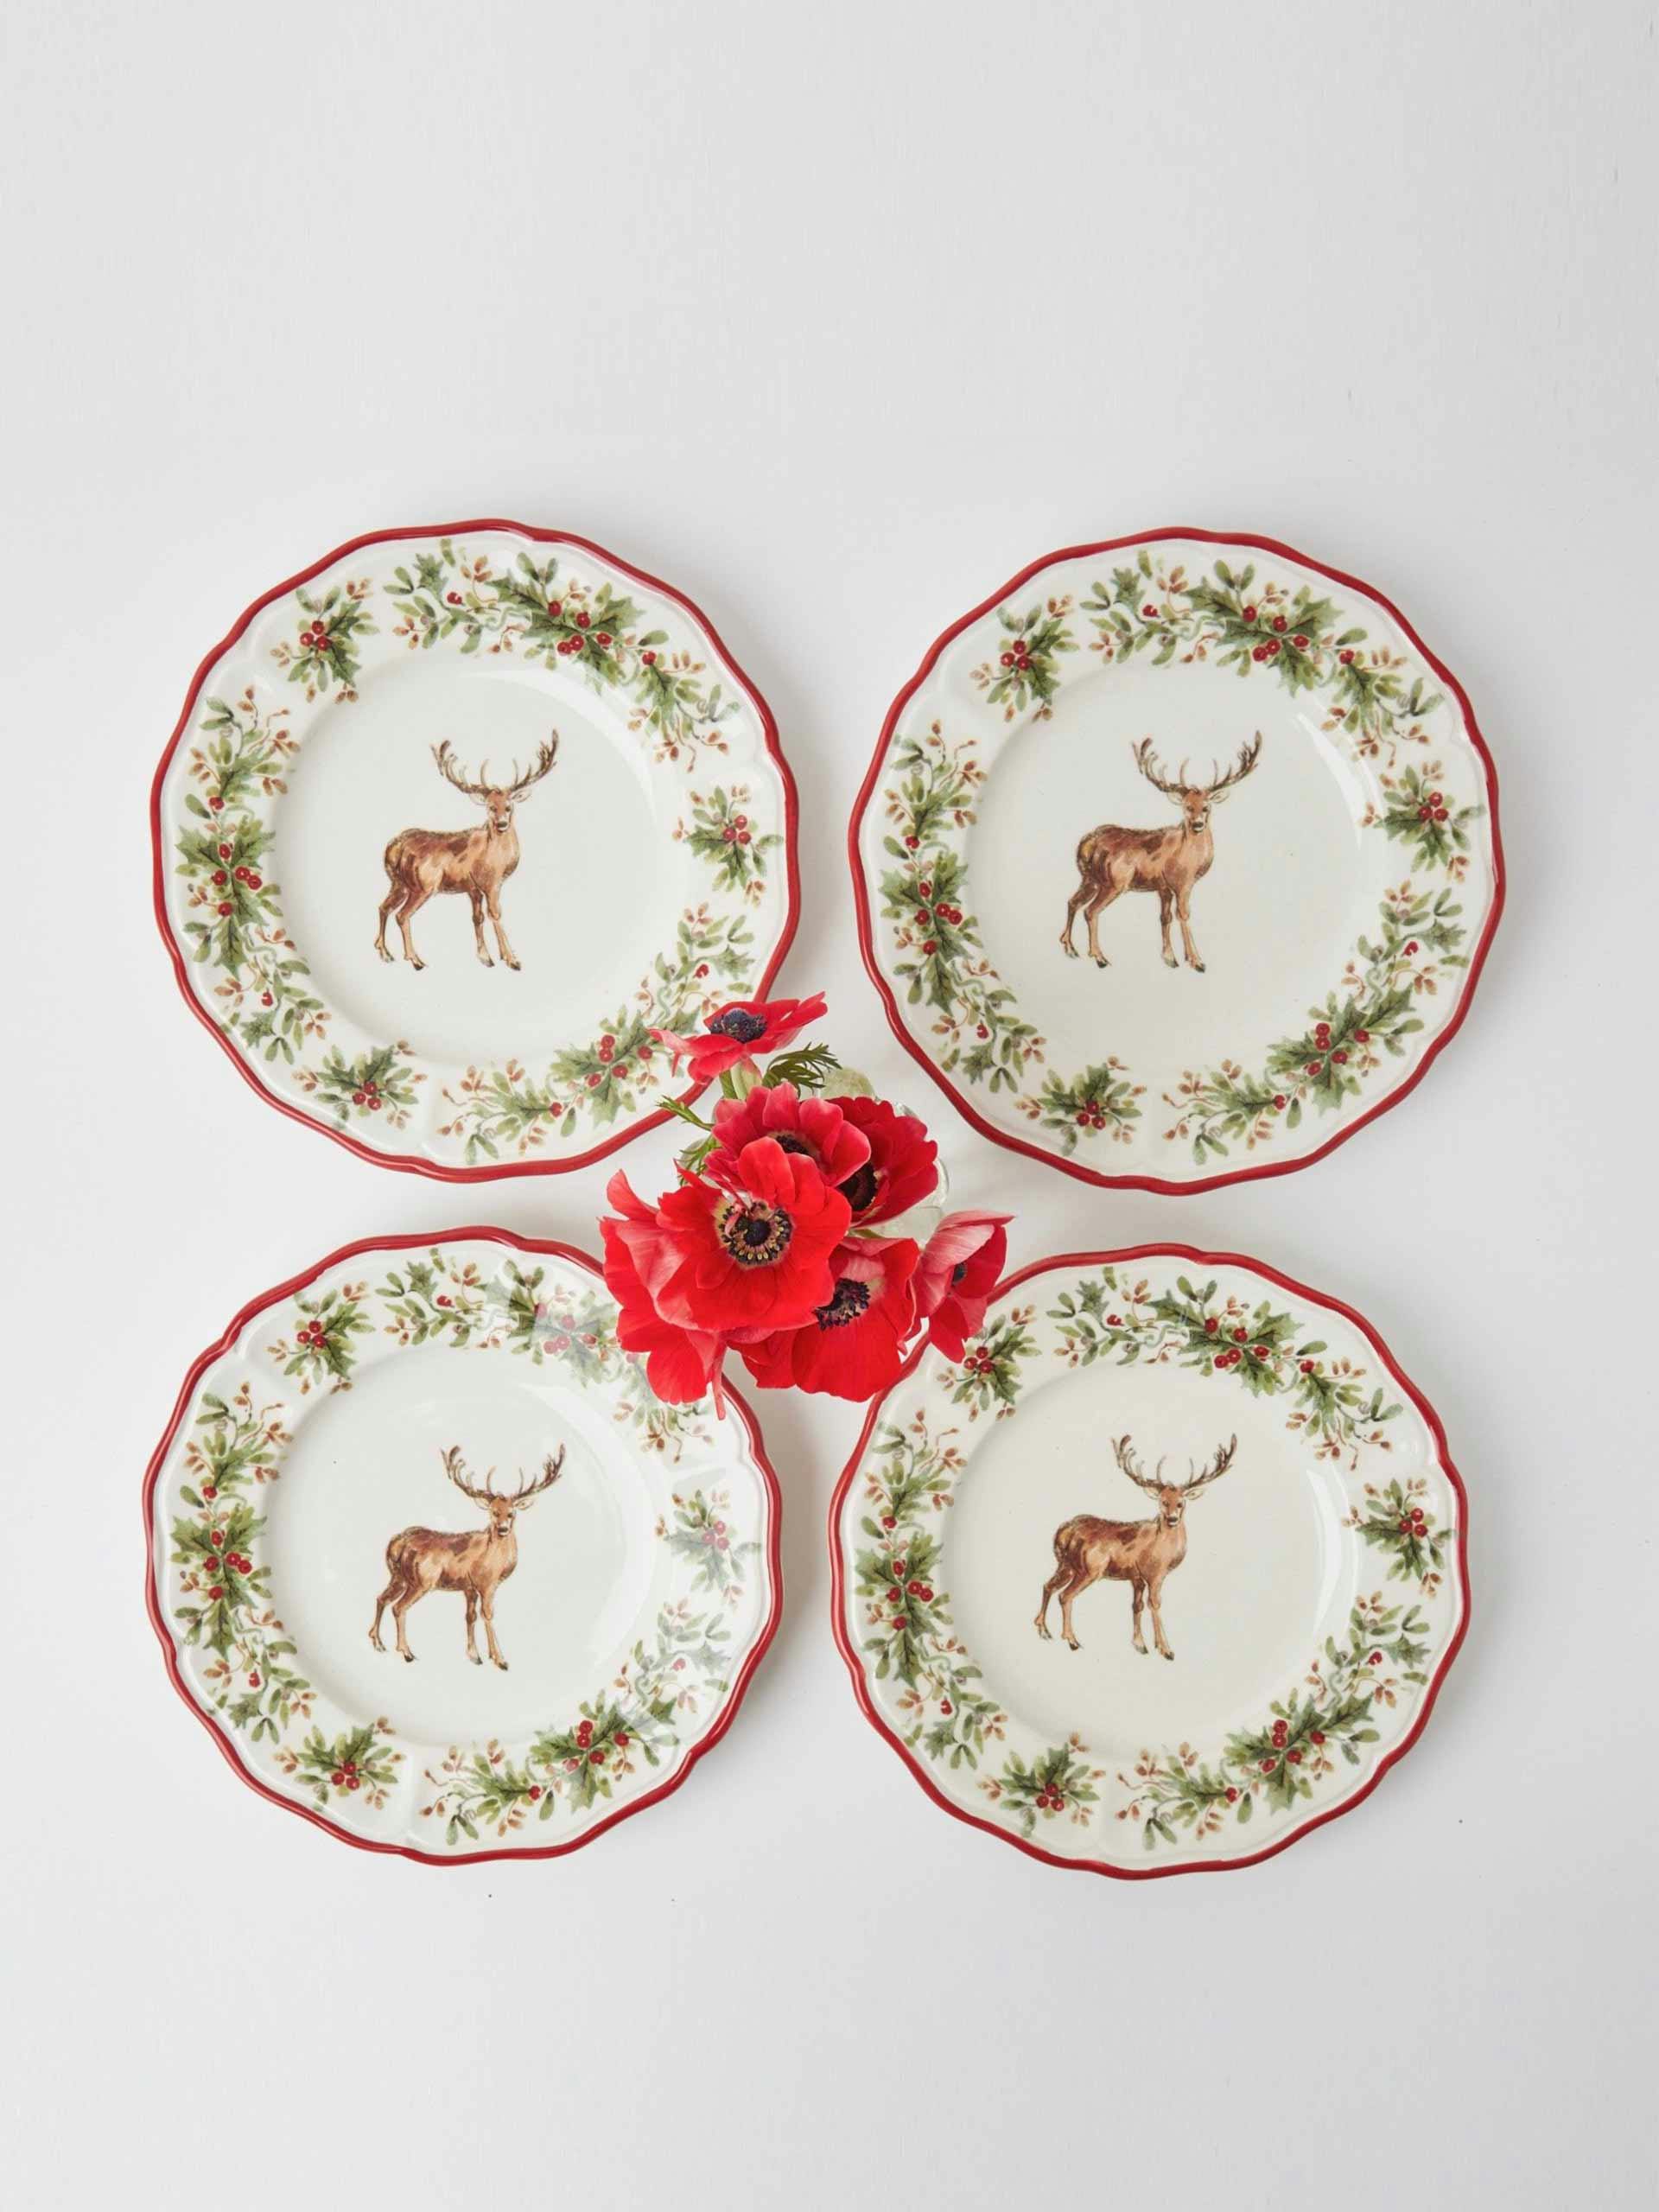 Reindeer starter plates